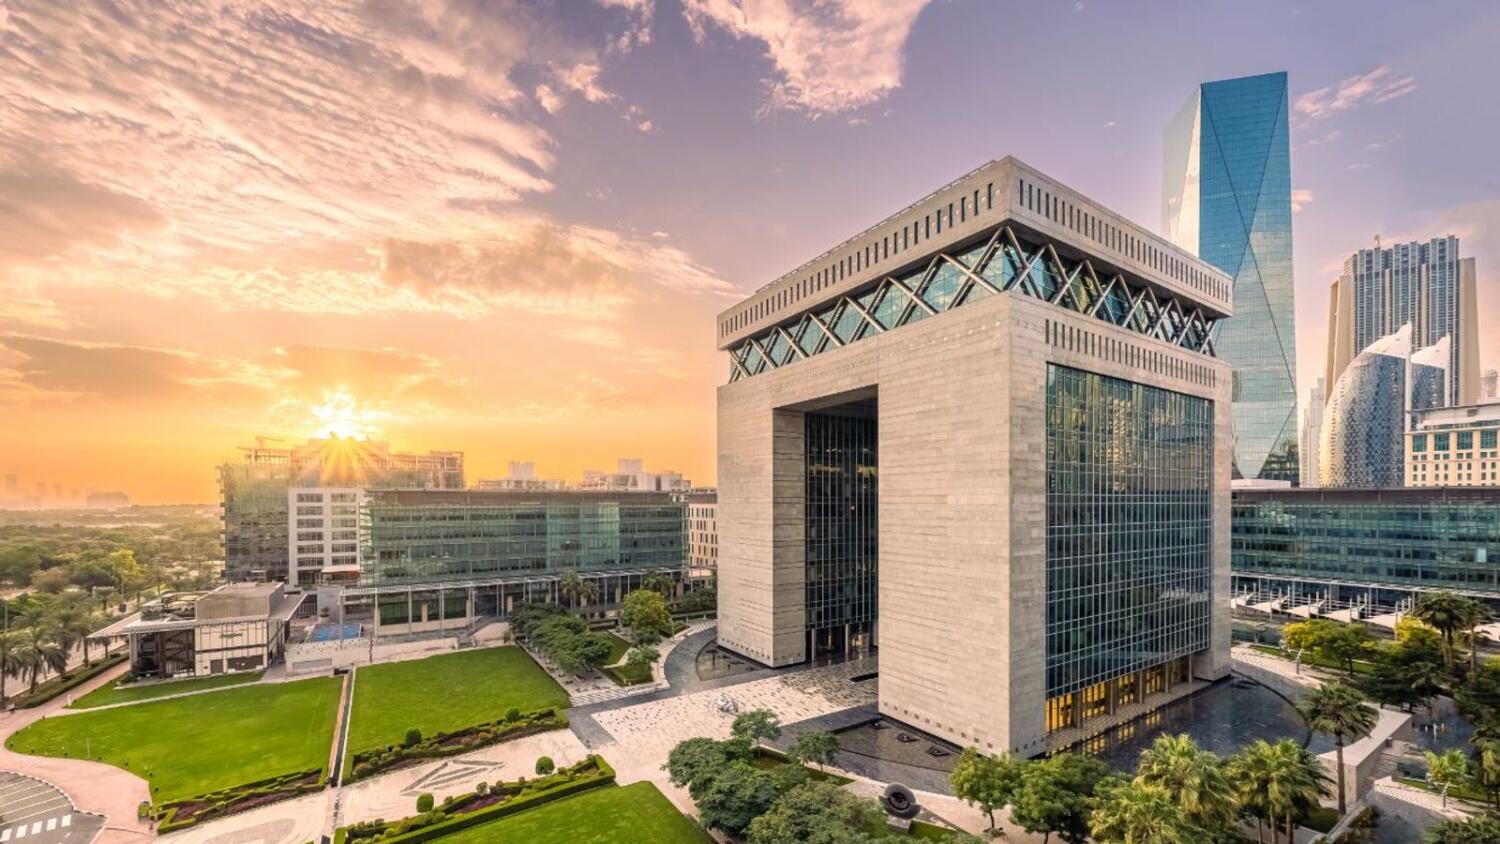 Dubai International Financial Centre. — Supplied photo